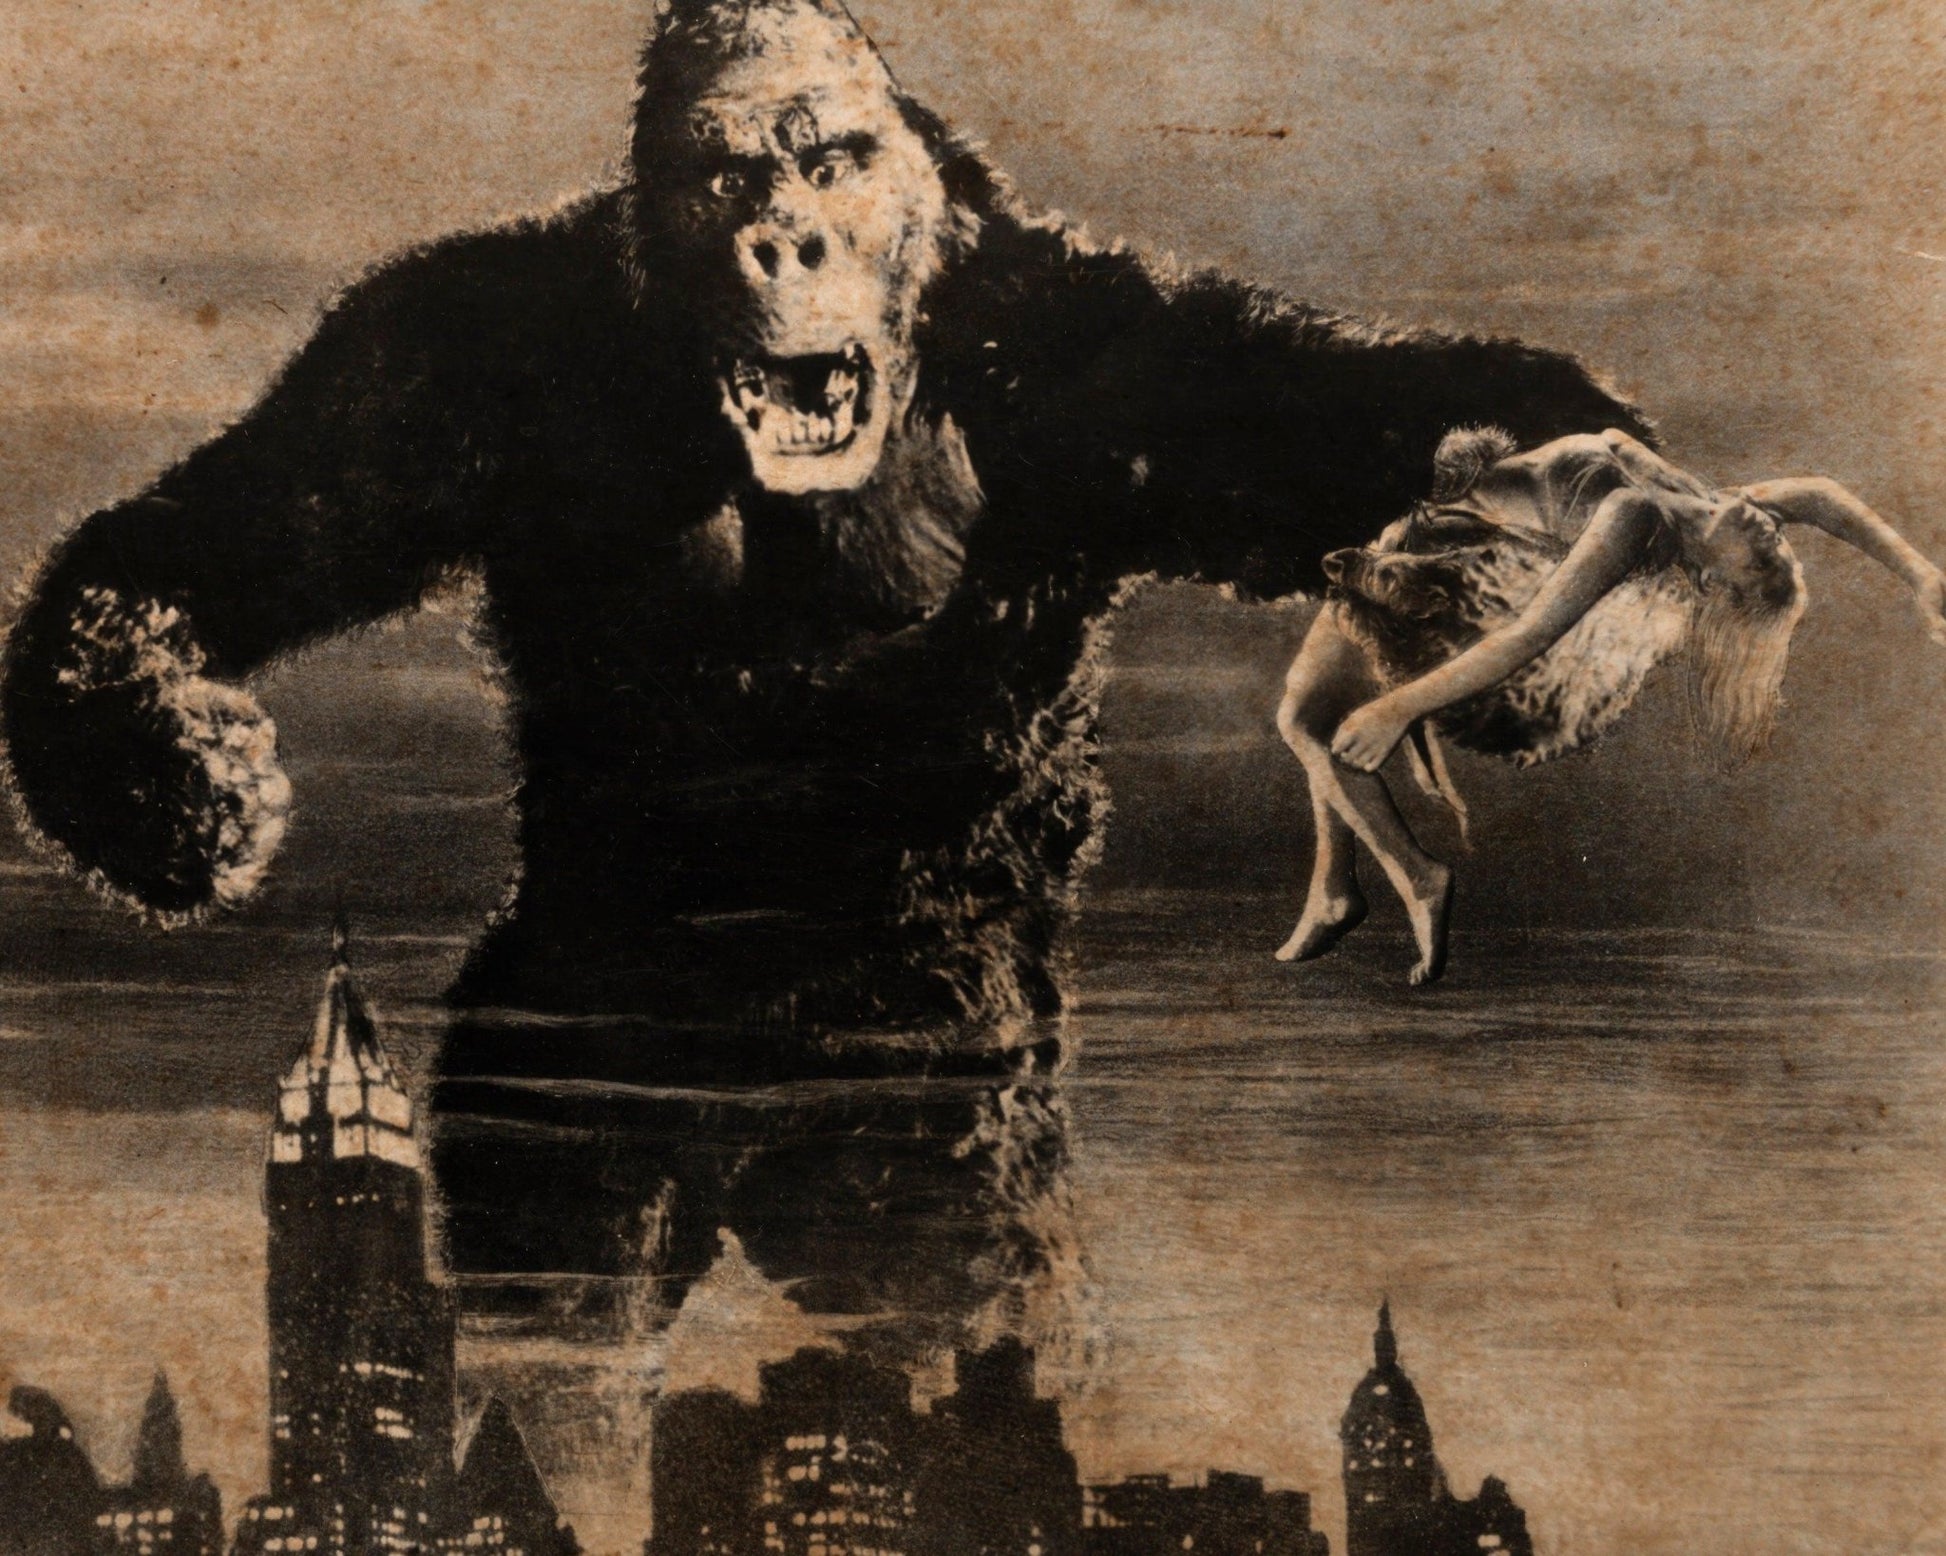 Vintage Movie Poster "King Kong" (c.1933) - Mabon Gallery